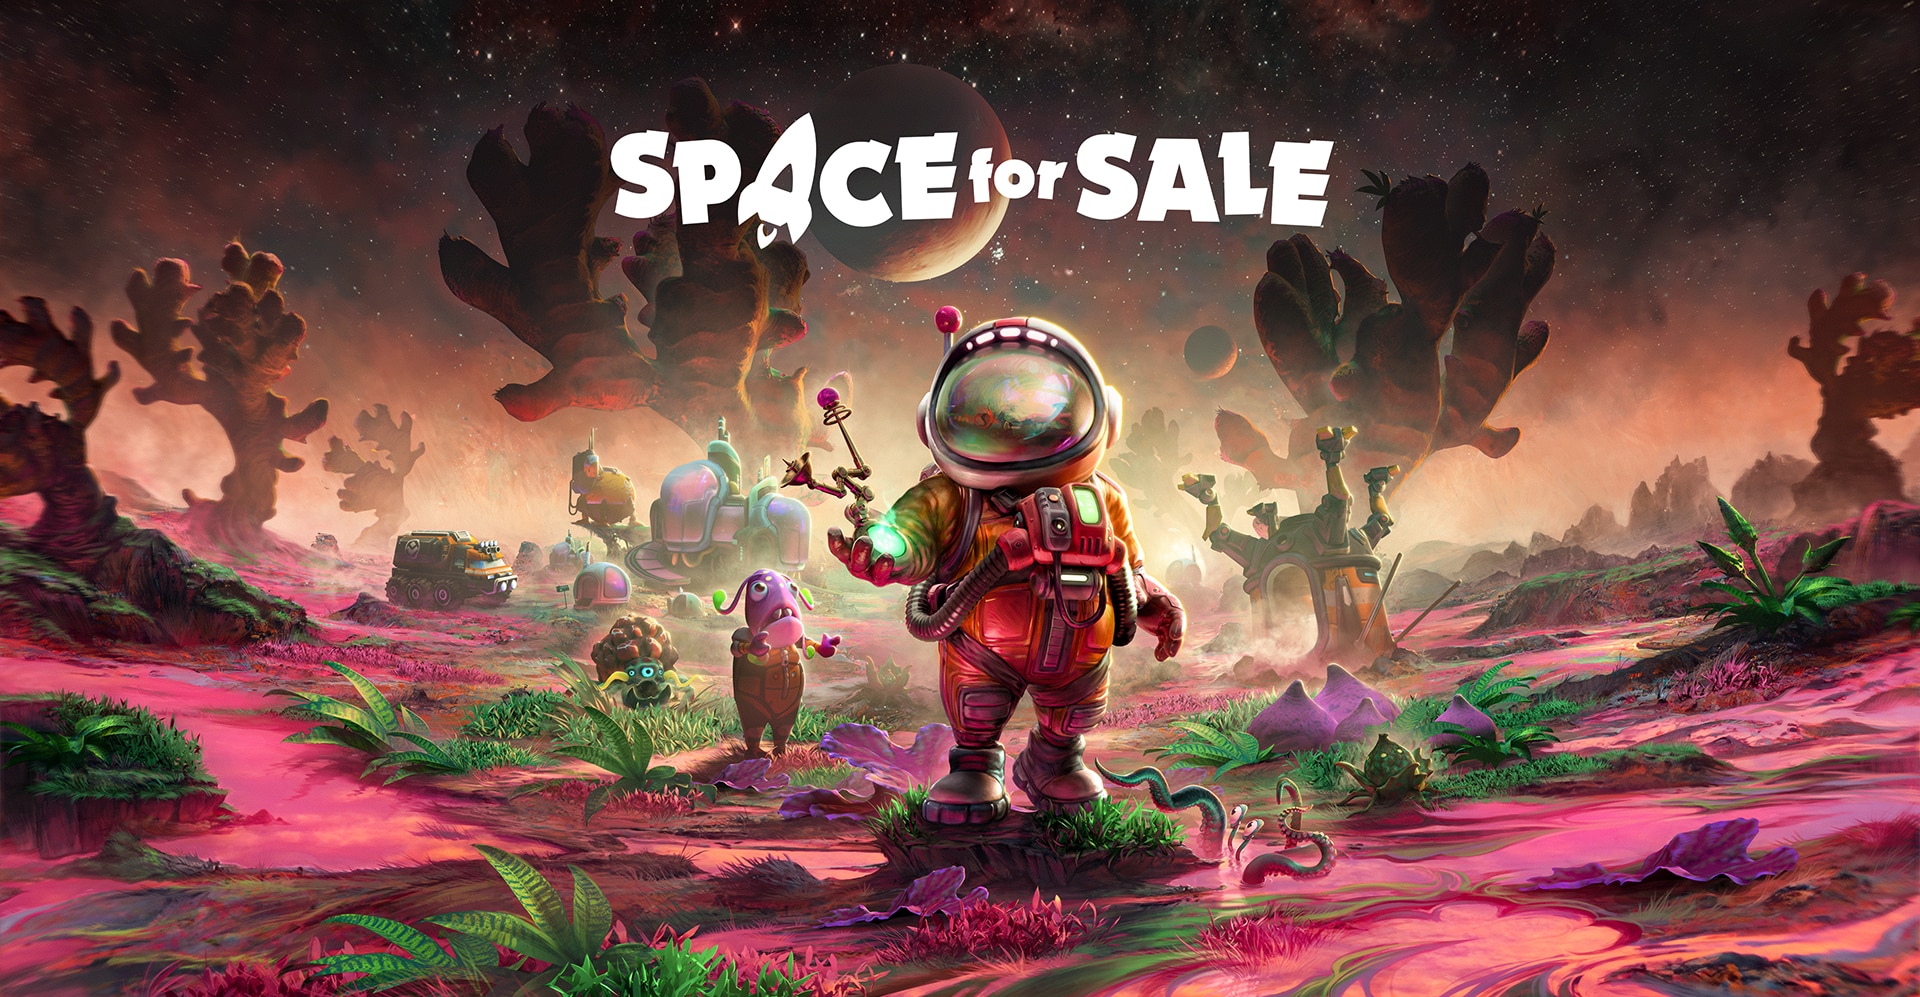 Space for Sale announcement trailer PC game alien property developer intergalactic Mirage Game Studios